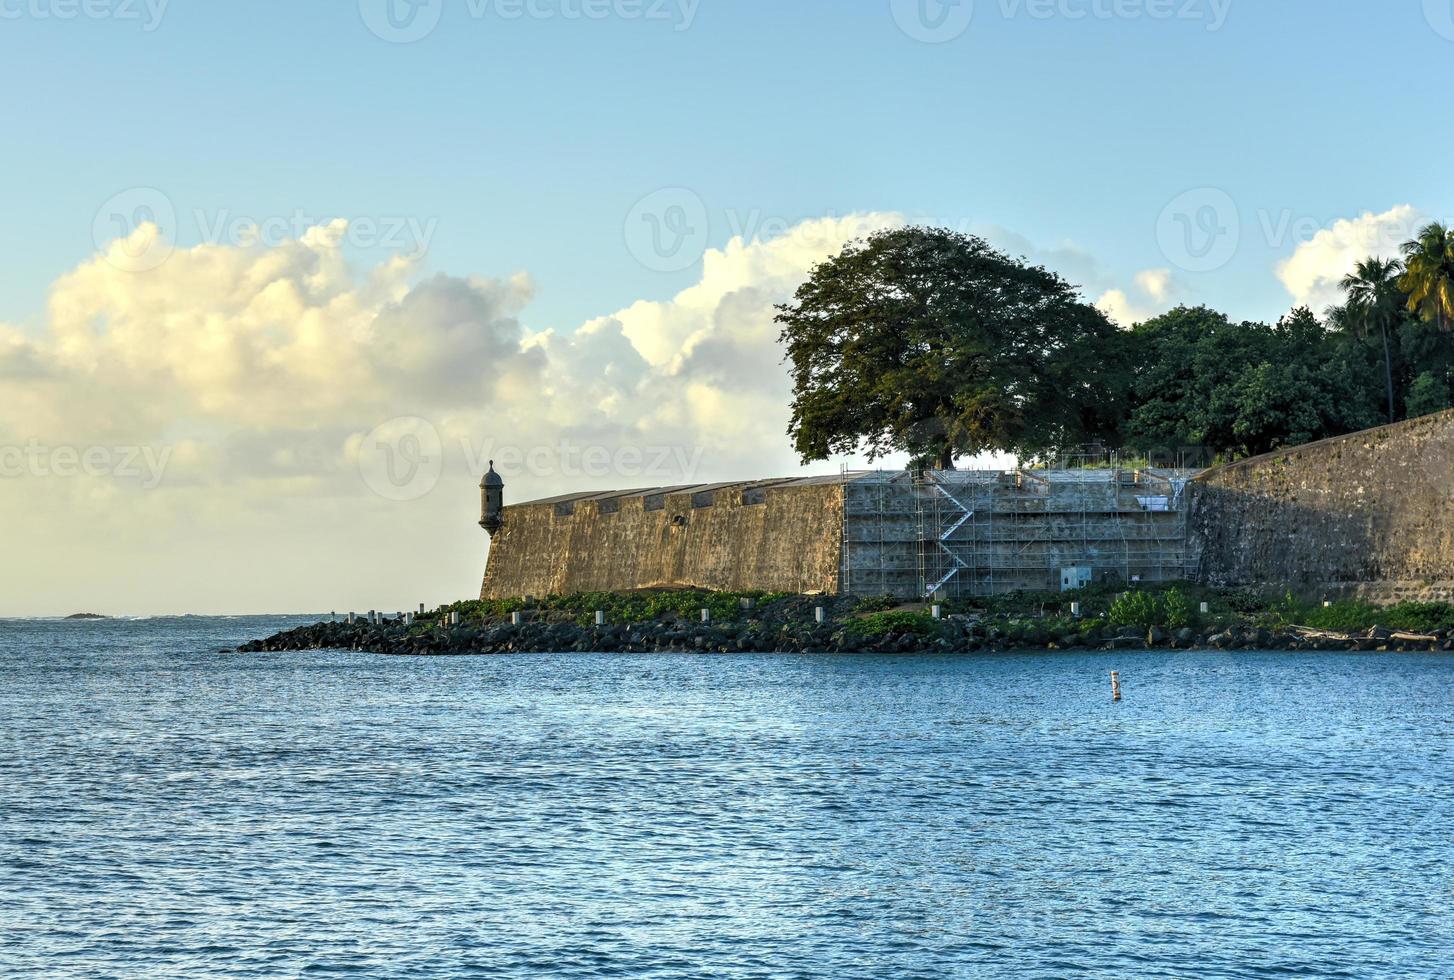 Castillo San Felipe del Morro also known as Fort San Felipe del Morro or Morro Castle. It is a 16th-century citadel located in San Juan Puerto Rico. photo